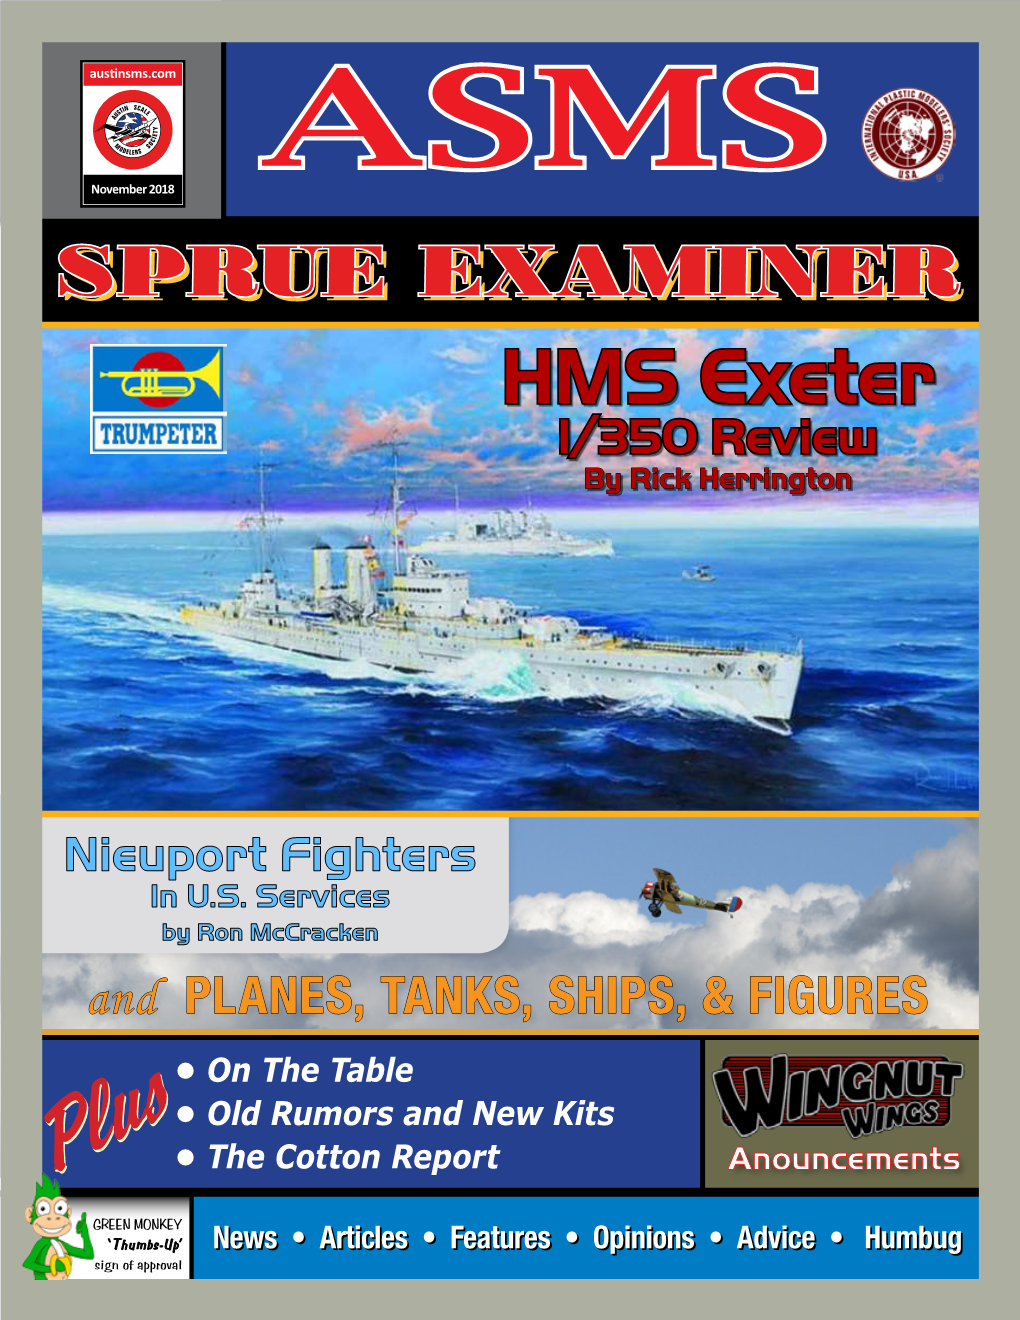 HMS Exeter 1/350 Review by Rick Herrington